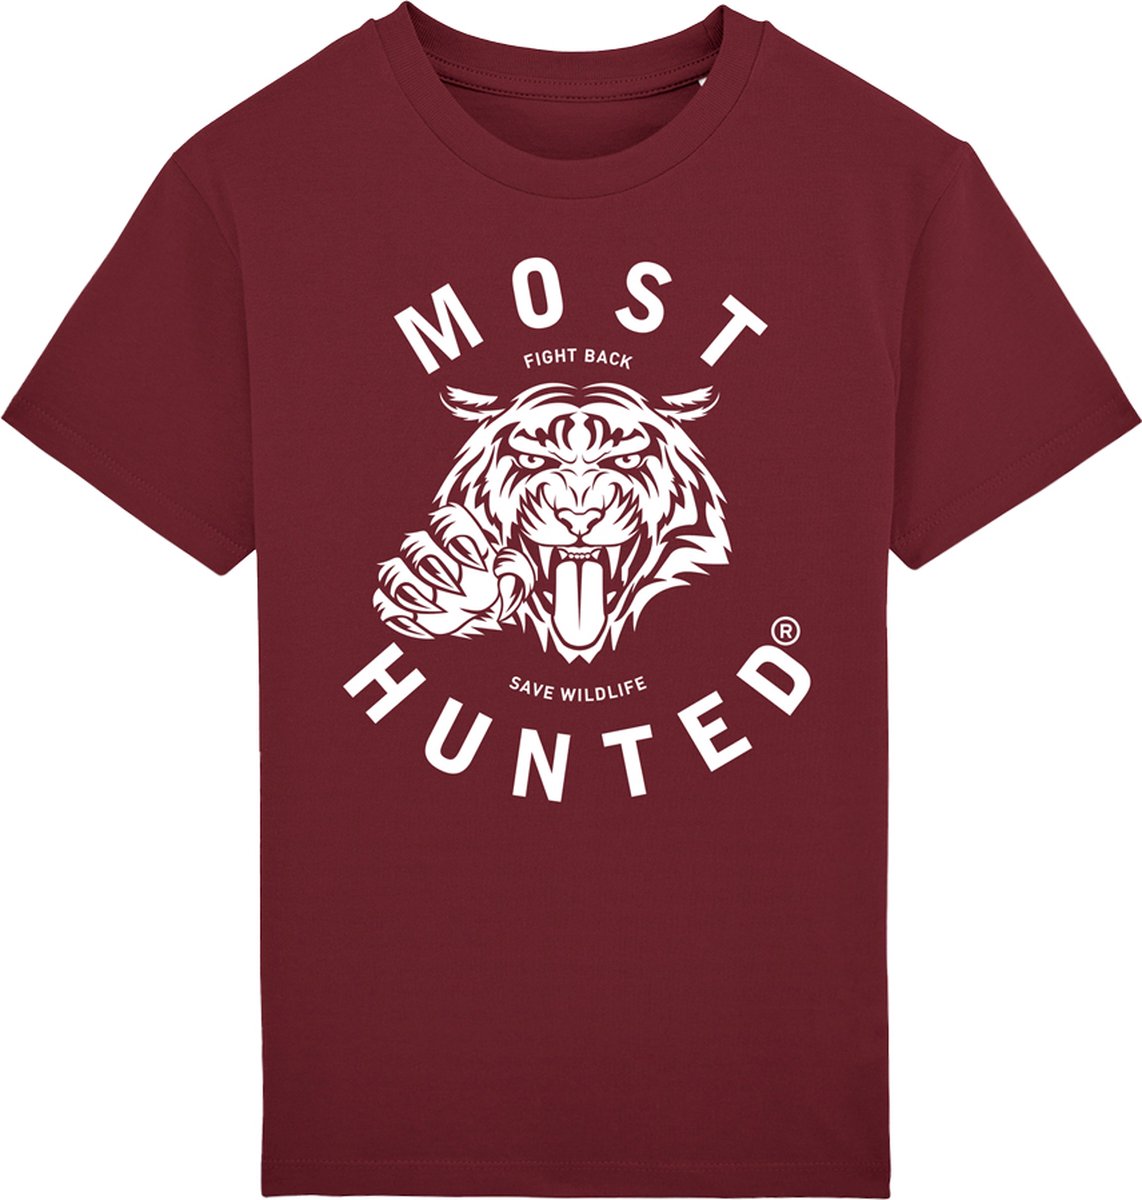 Most Hunted - kinder t-shirt - tijger - bordeaux - wit - maat 110/116